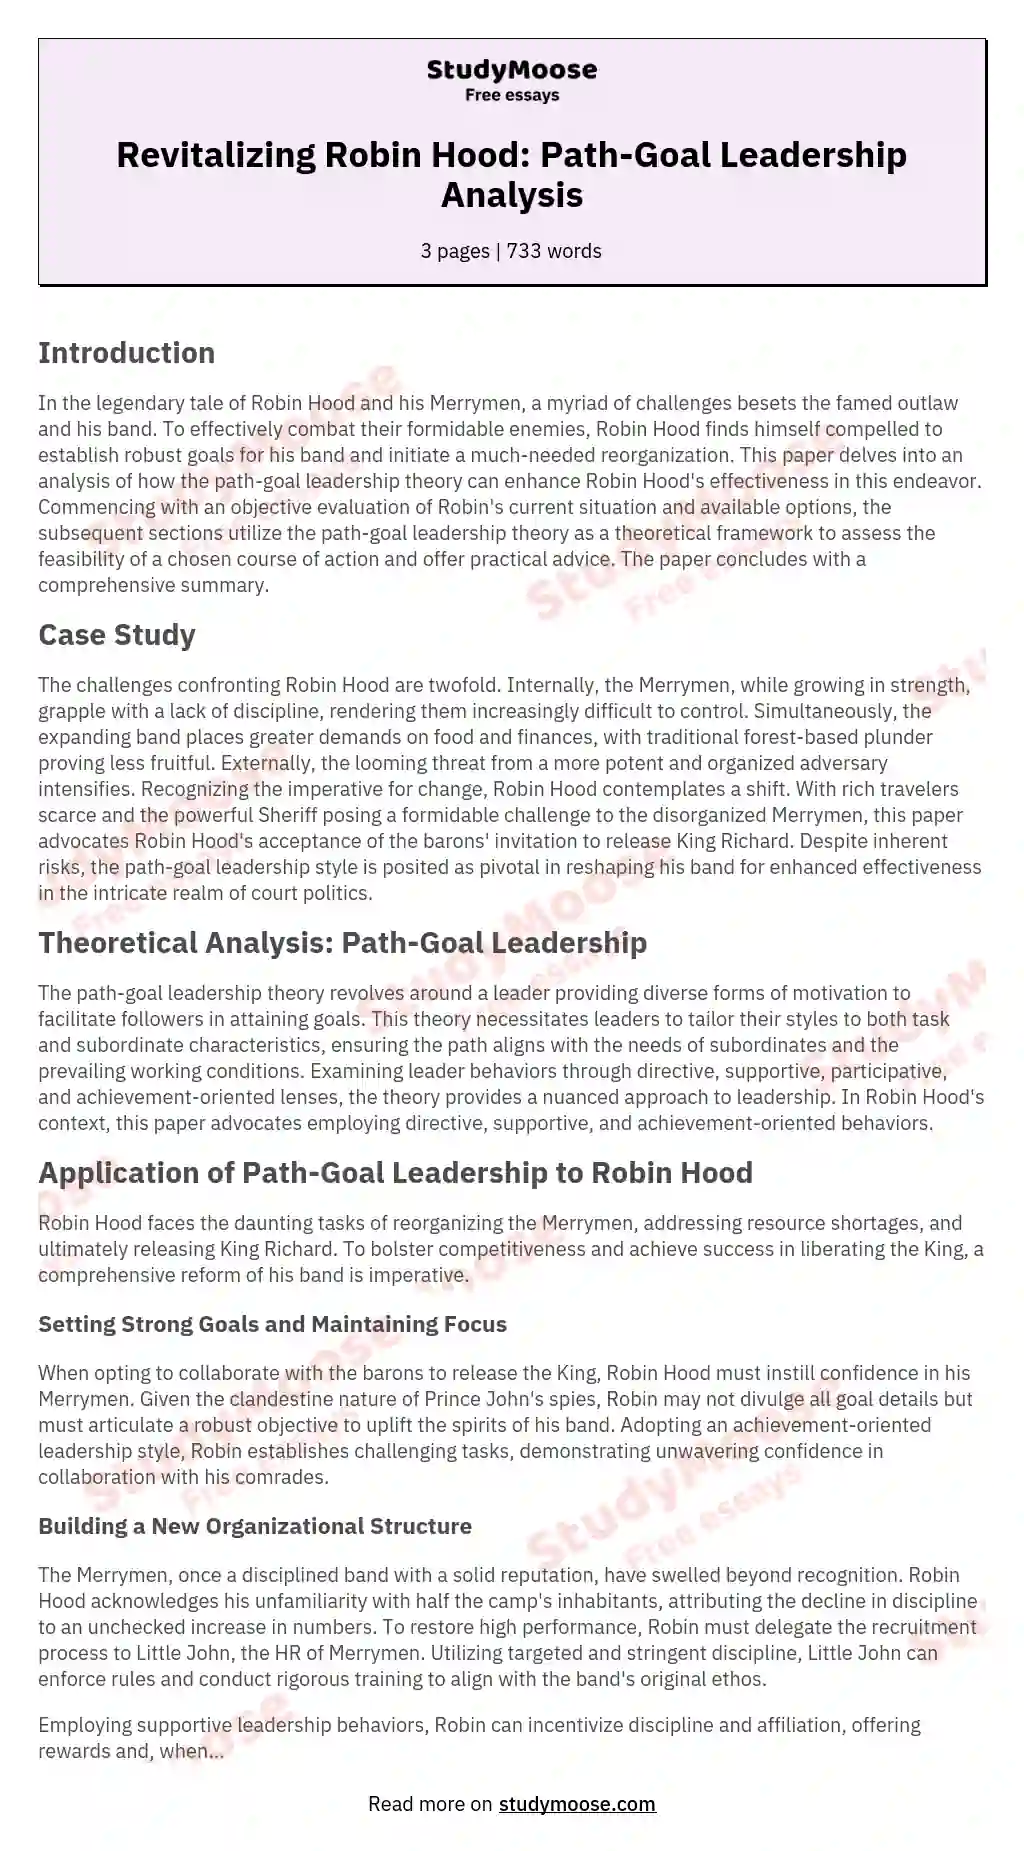 Revitalizing Robin Hood: Path-Goal Leadership Analysis essay